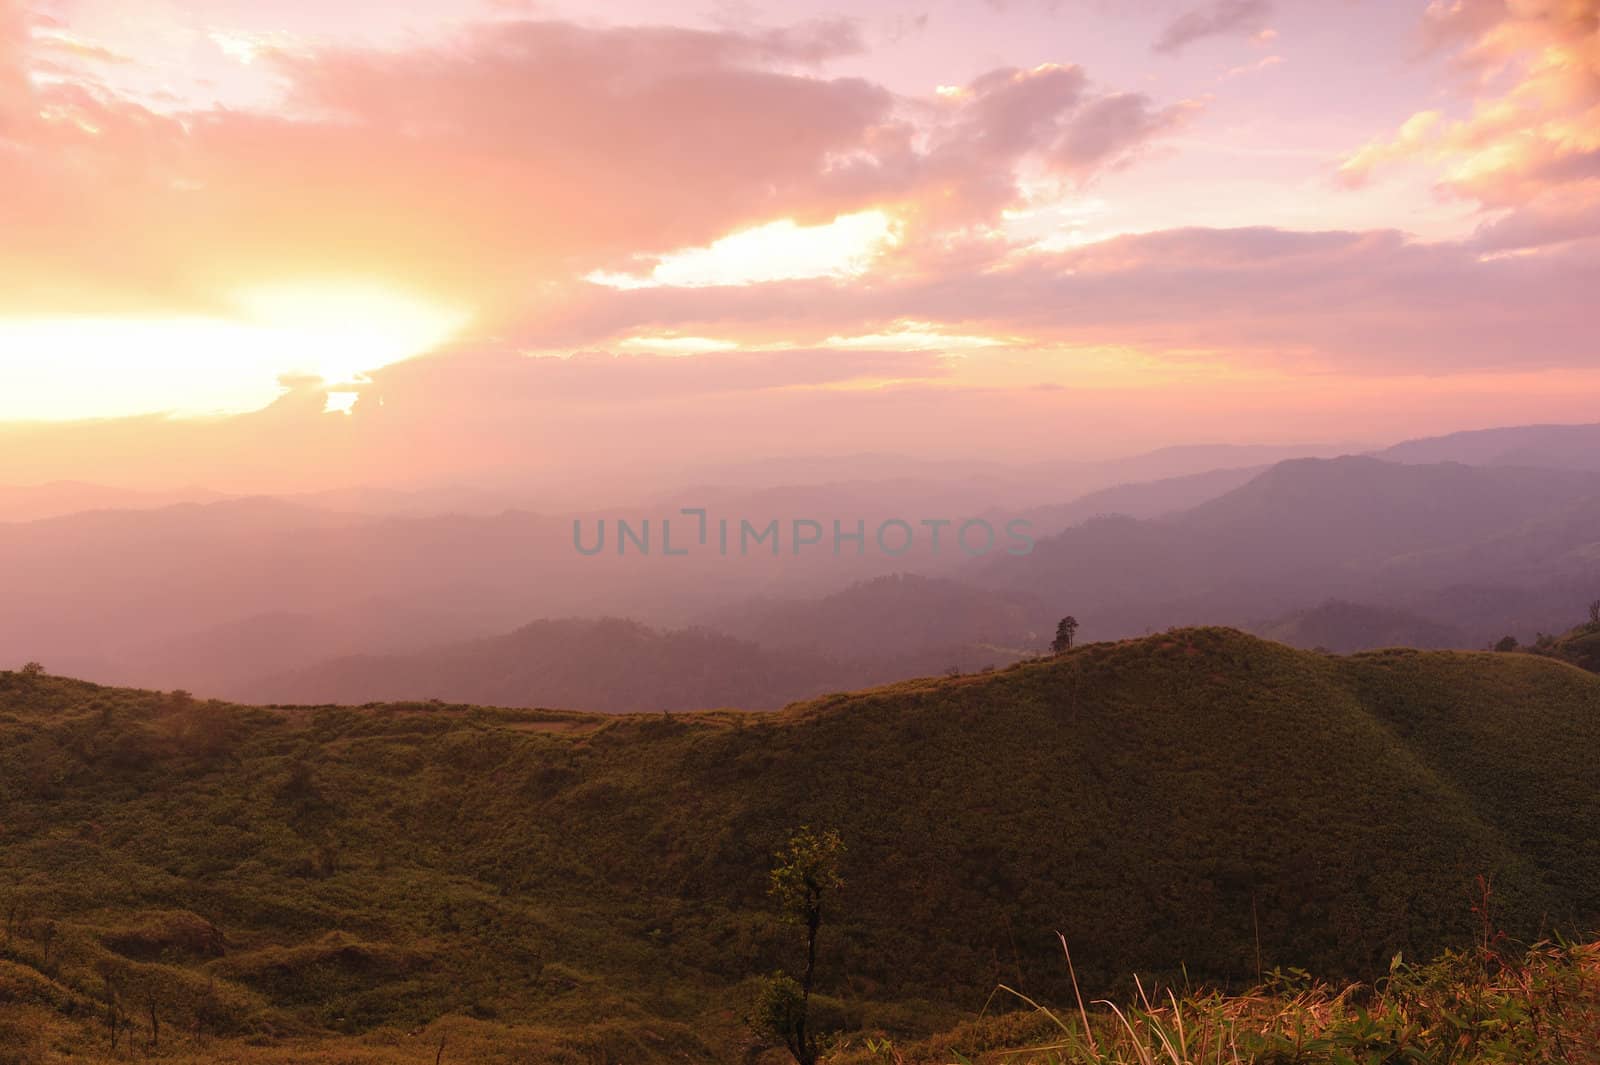 Nice sunset scene in mountains, Thailand.